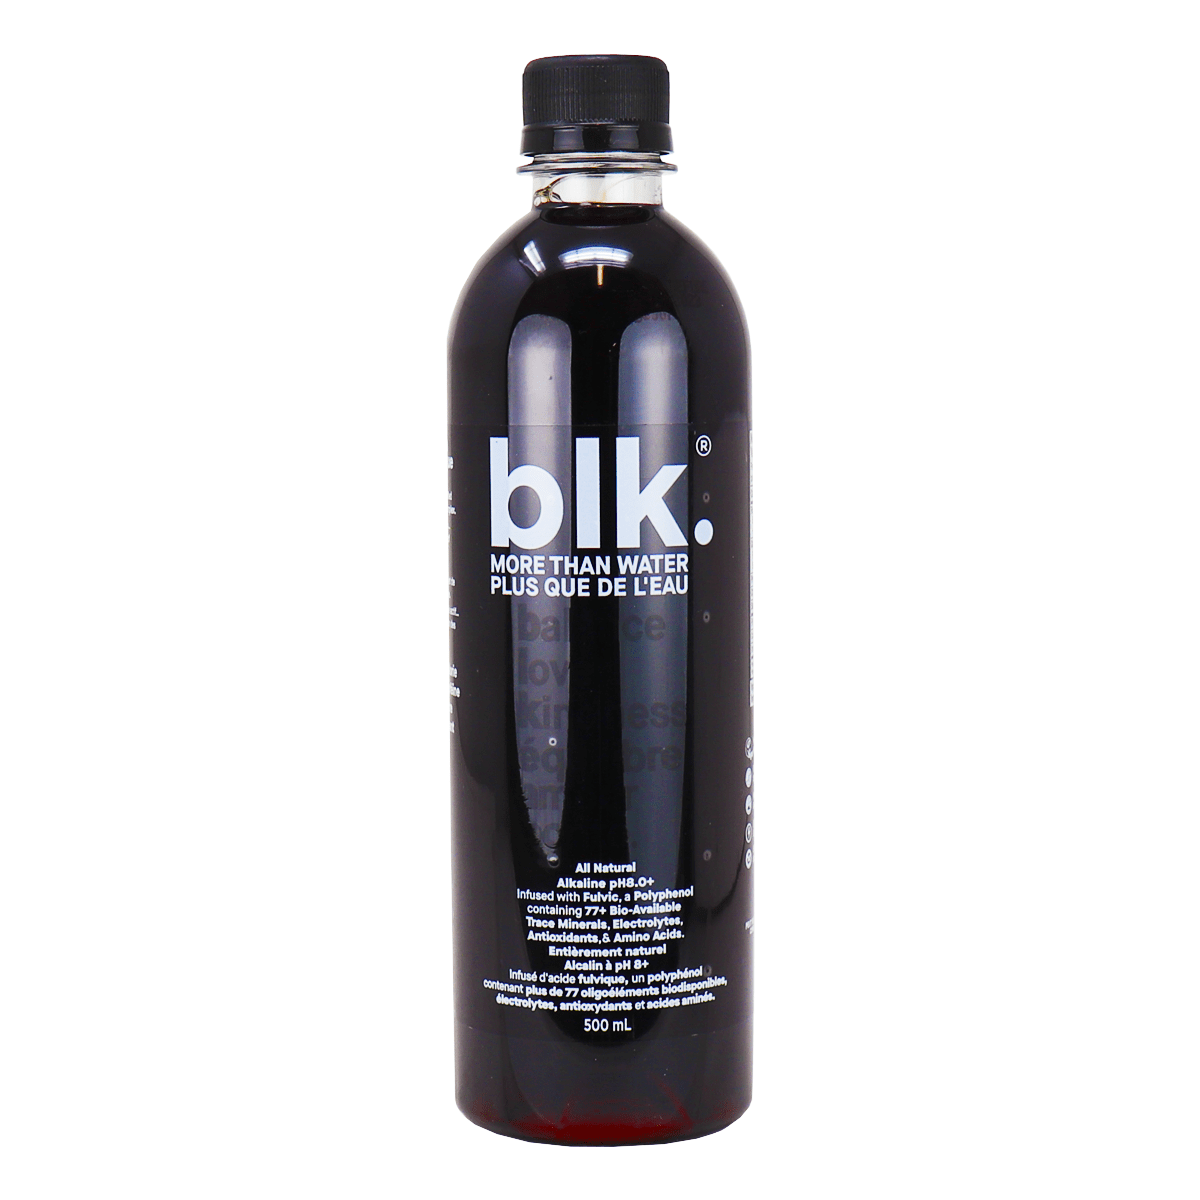 Blk water (Black Alkaline water), 12 x 500ml bottles, Water beverages, SNS Health